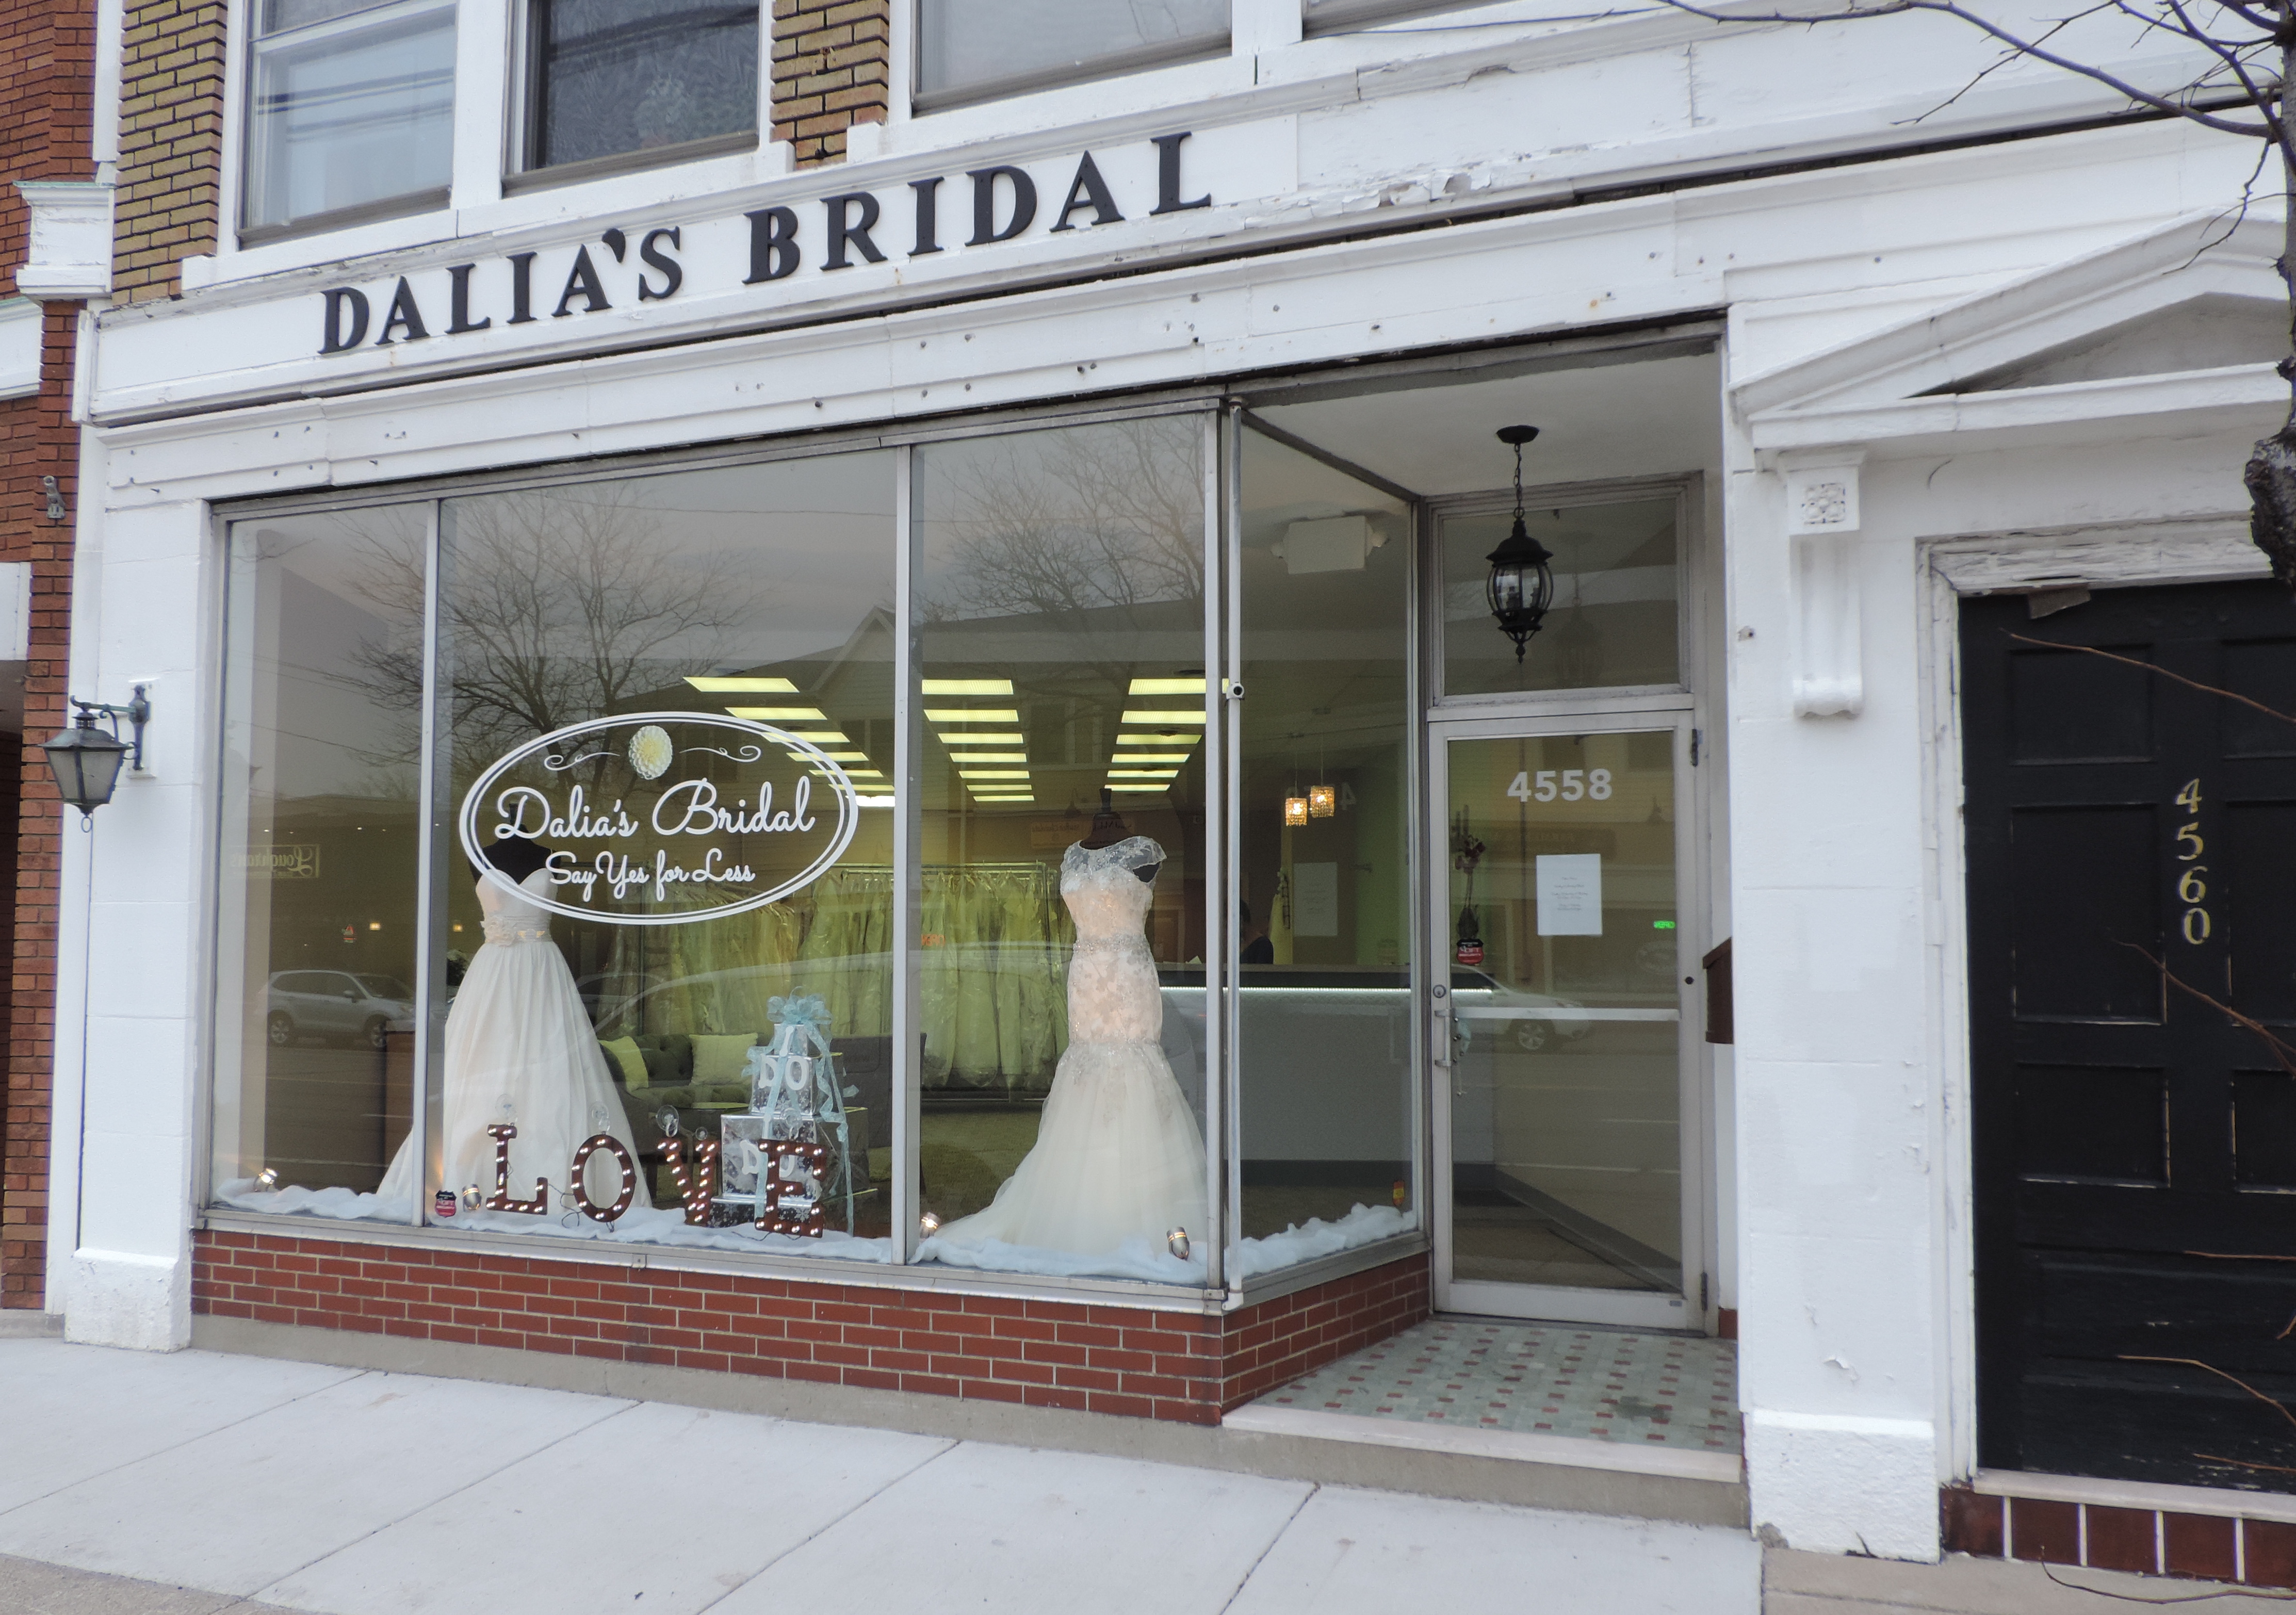 Dalia’s Bridal offers designer dresses for all occasions